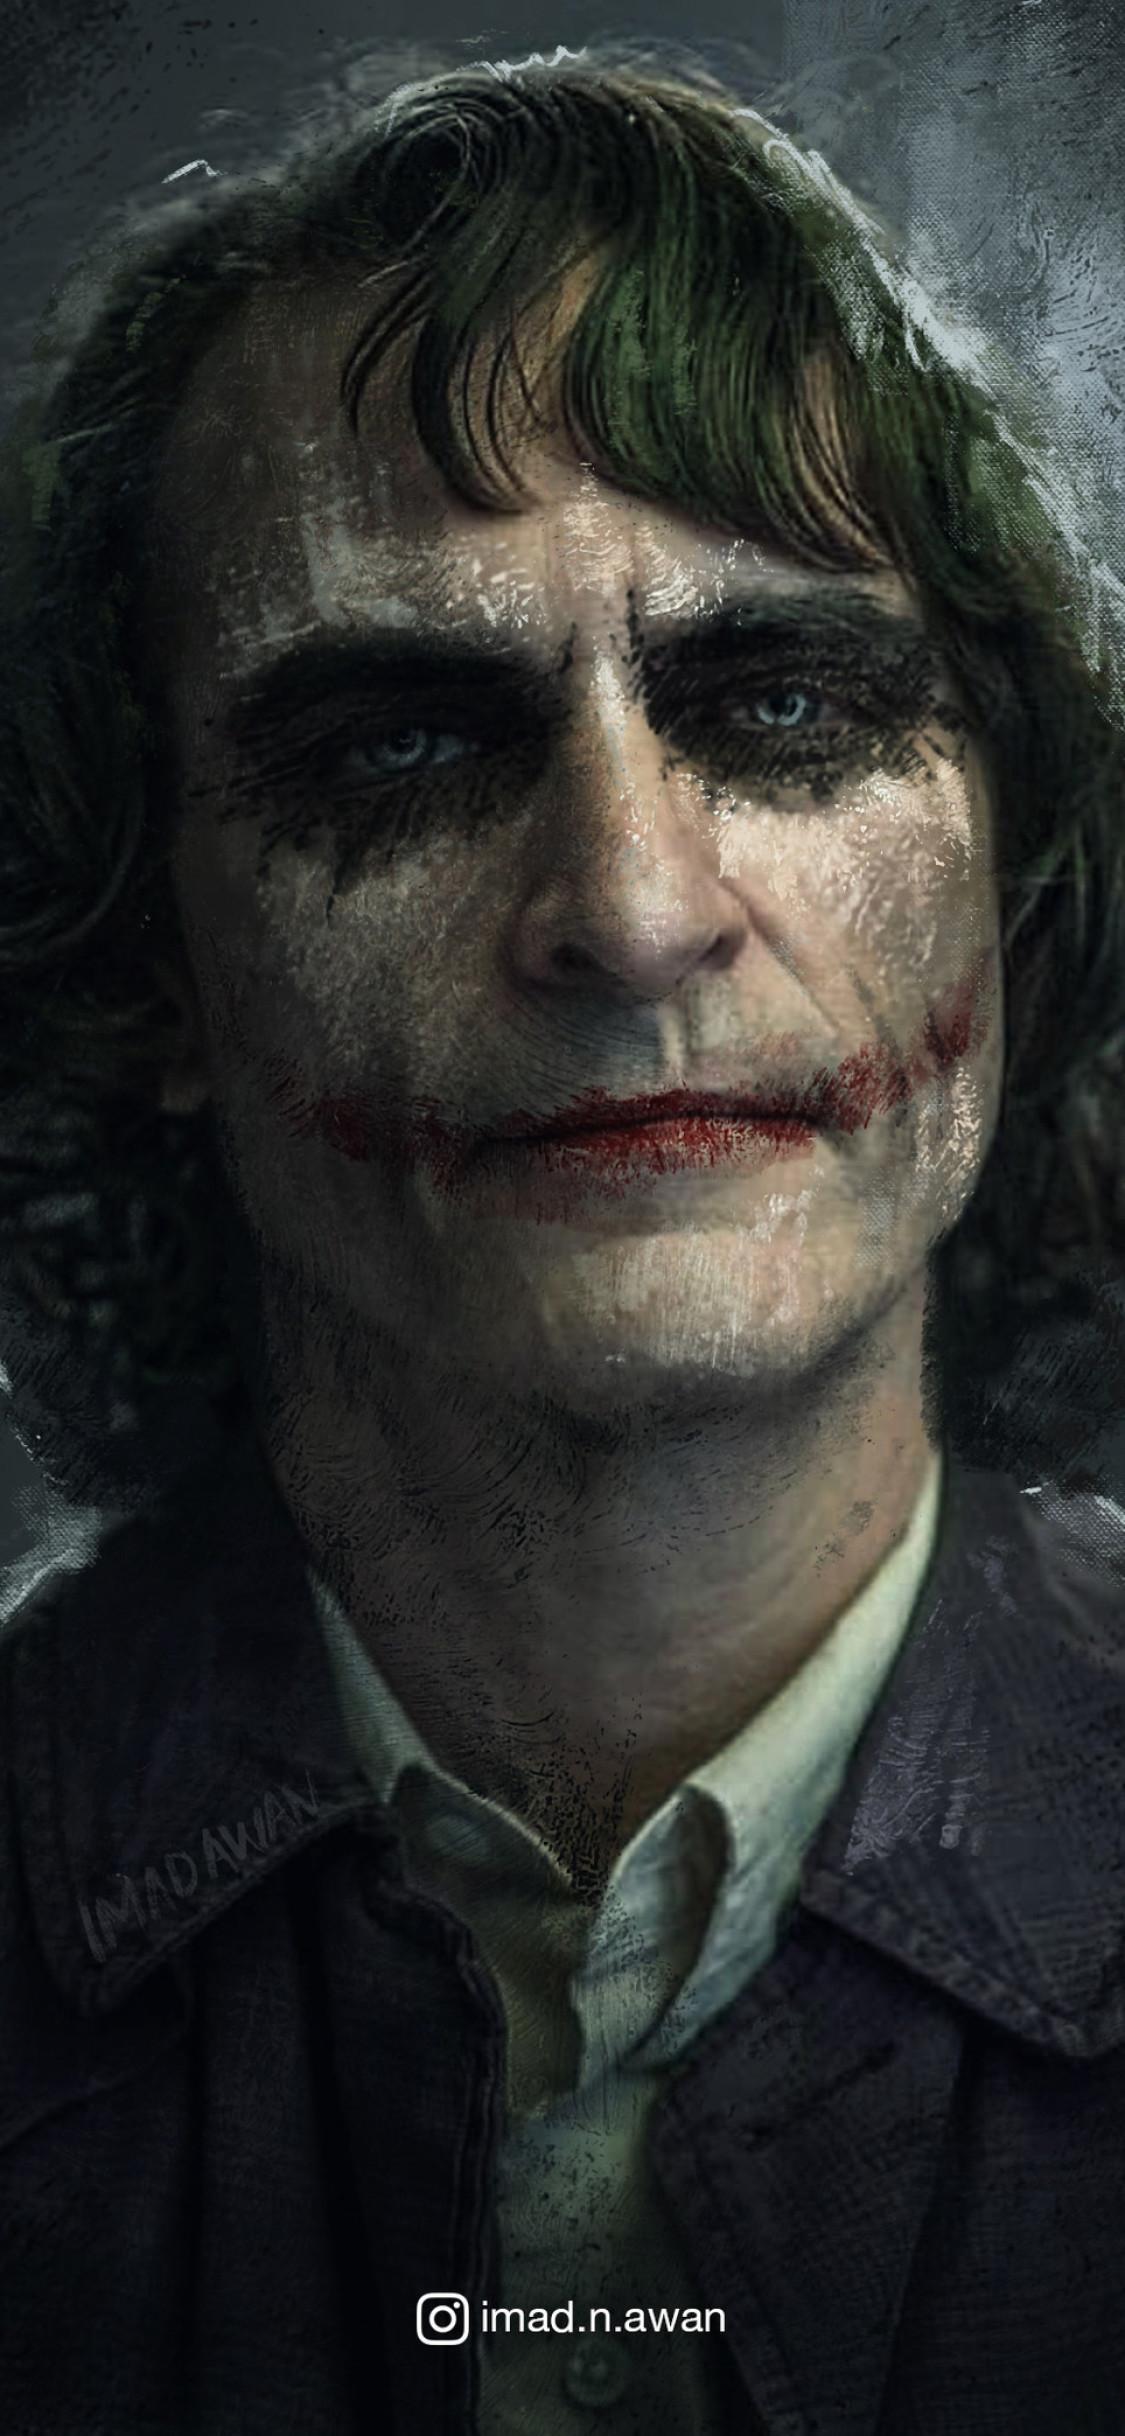 The Joker Joaquin Phoenix iPhone XS, iPhone 10